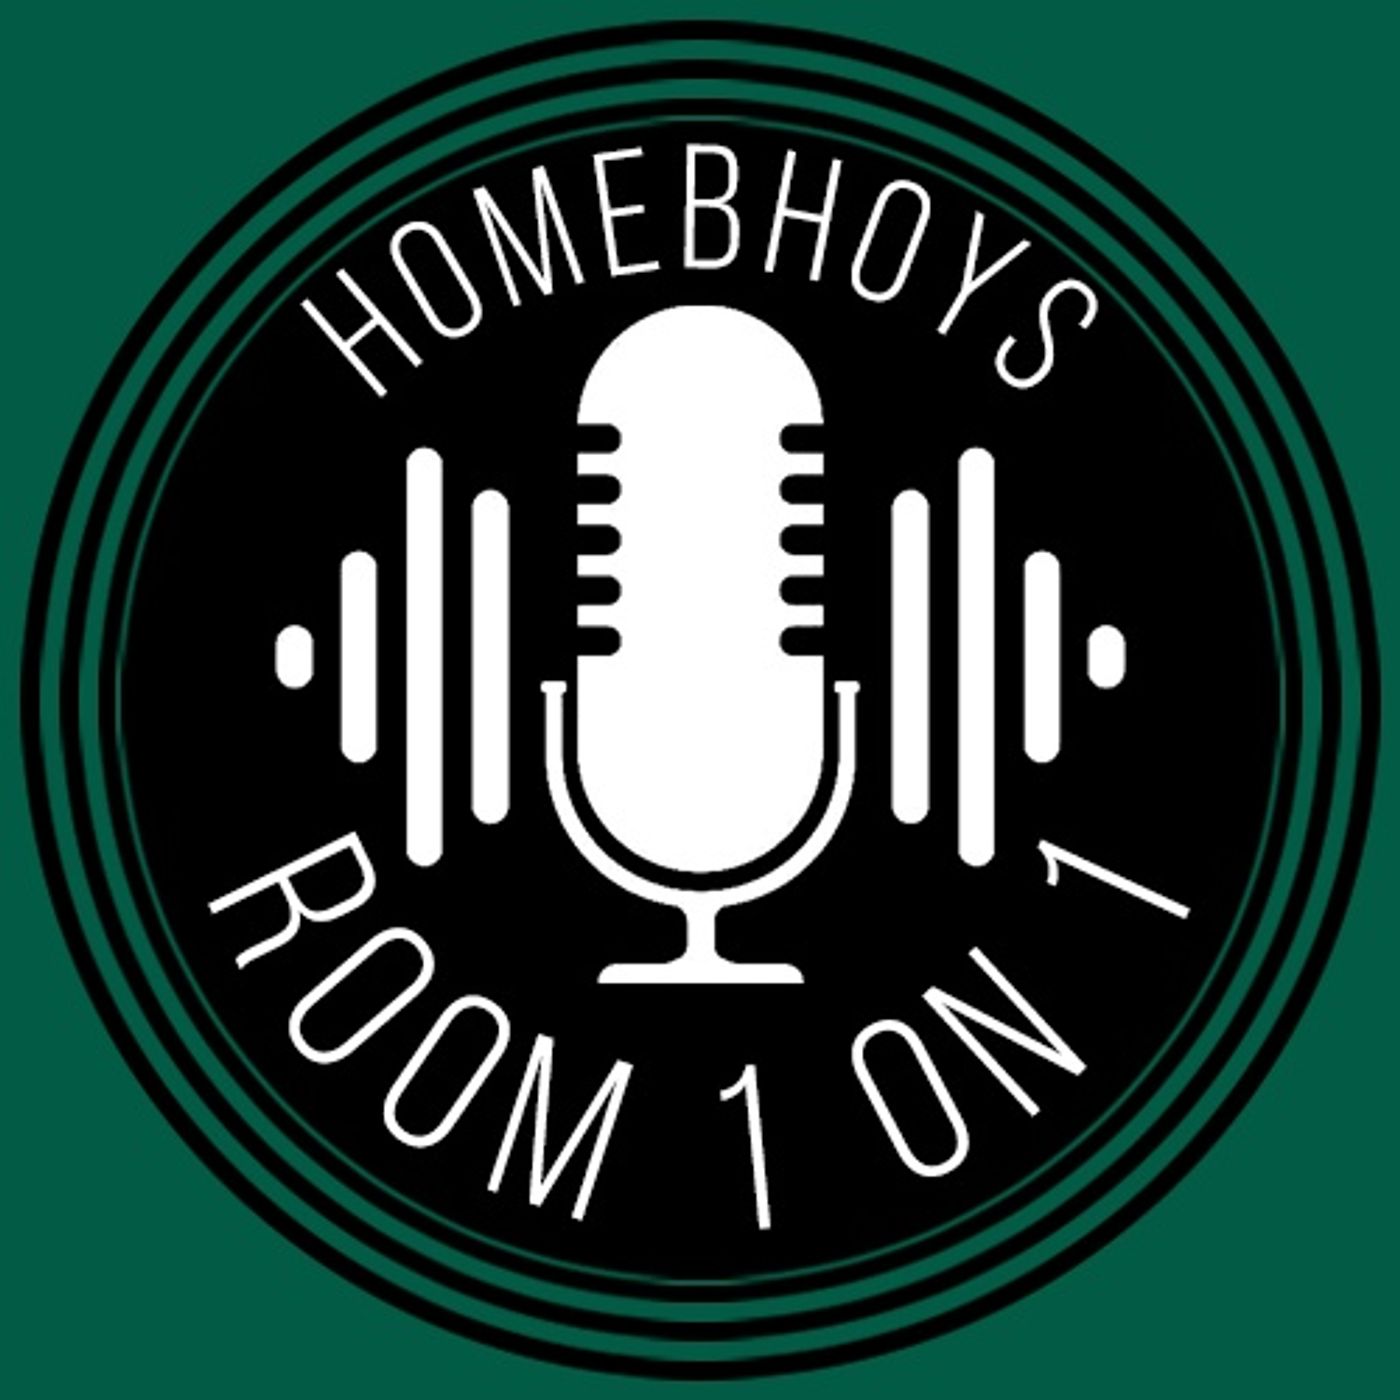 Homebhoys - Room 1 on 1 - Celtic Exchange - The Battle to Save Celtic